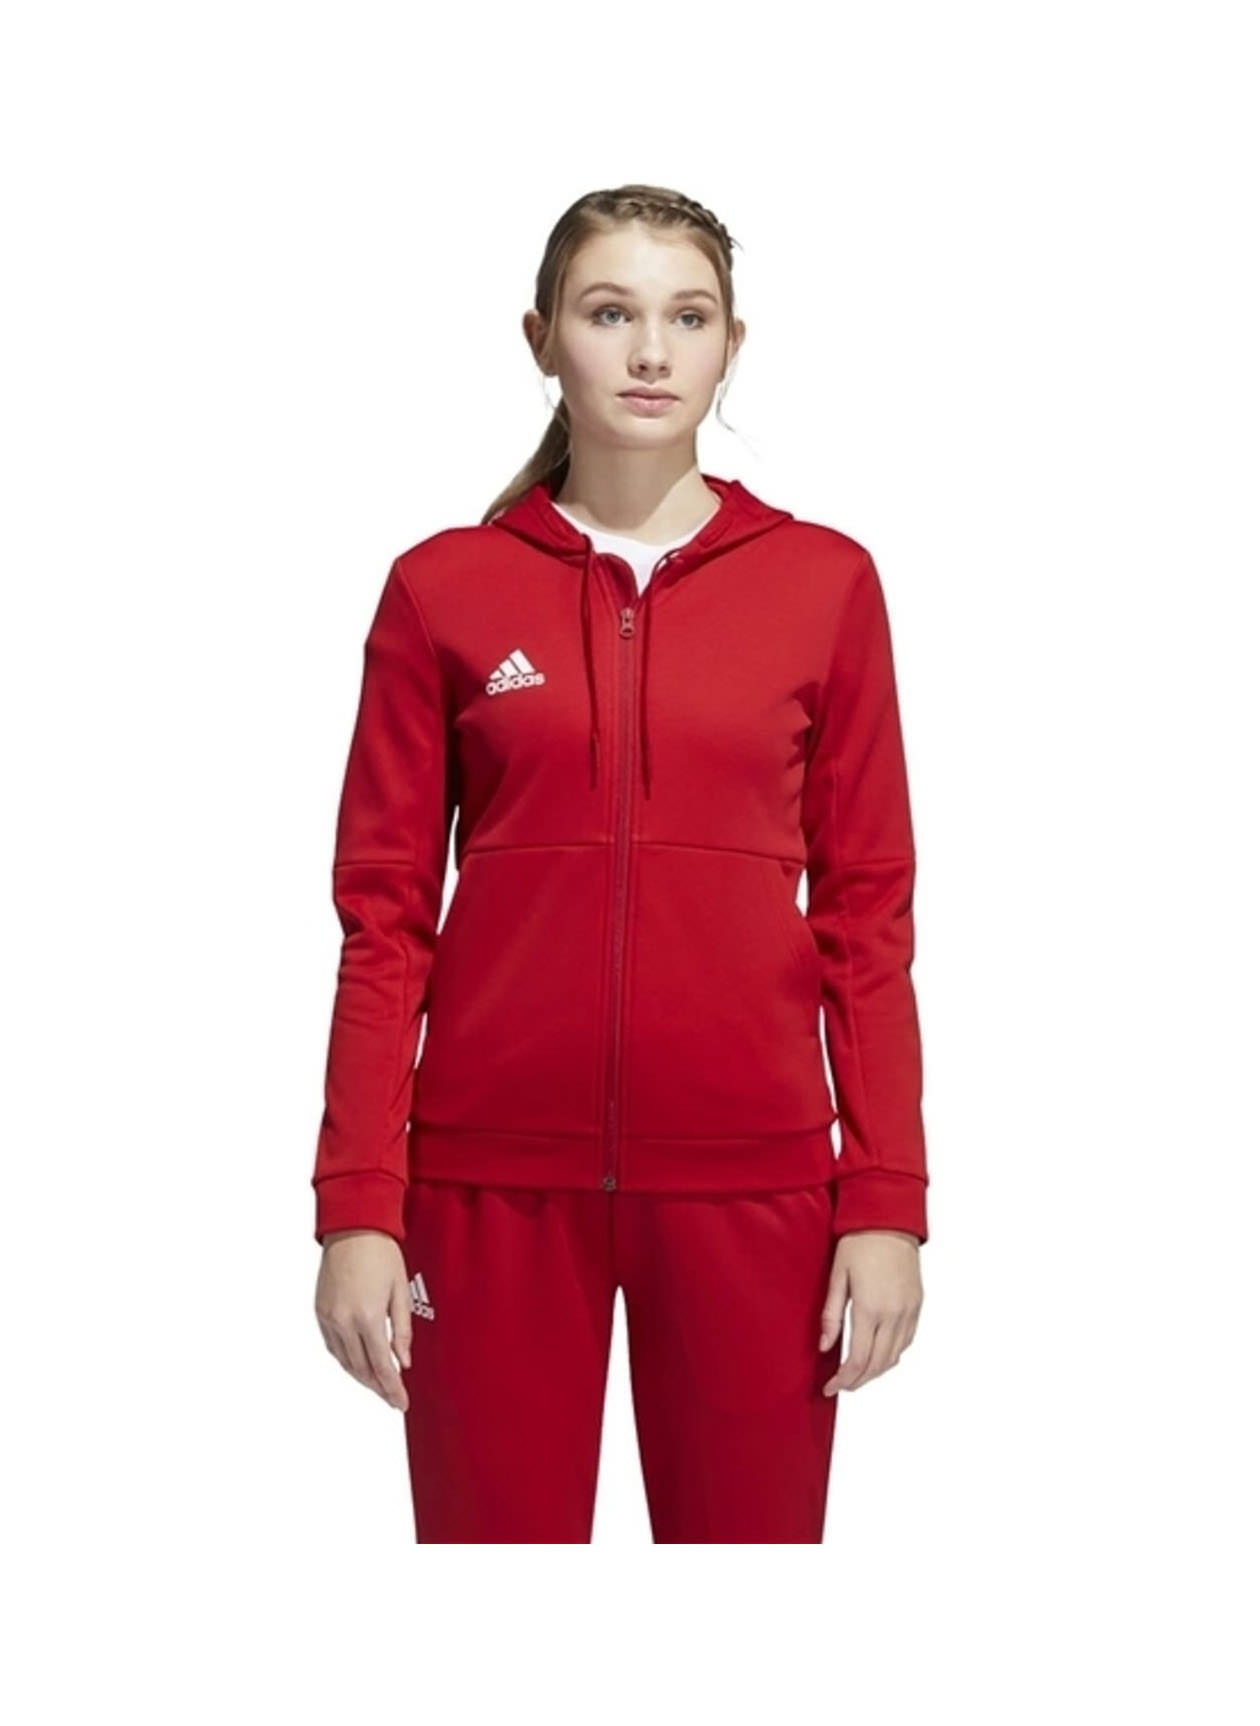 Women's Team Power Red Adidas Team Issue Jacket